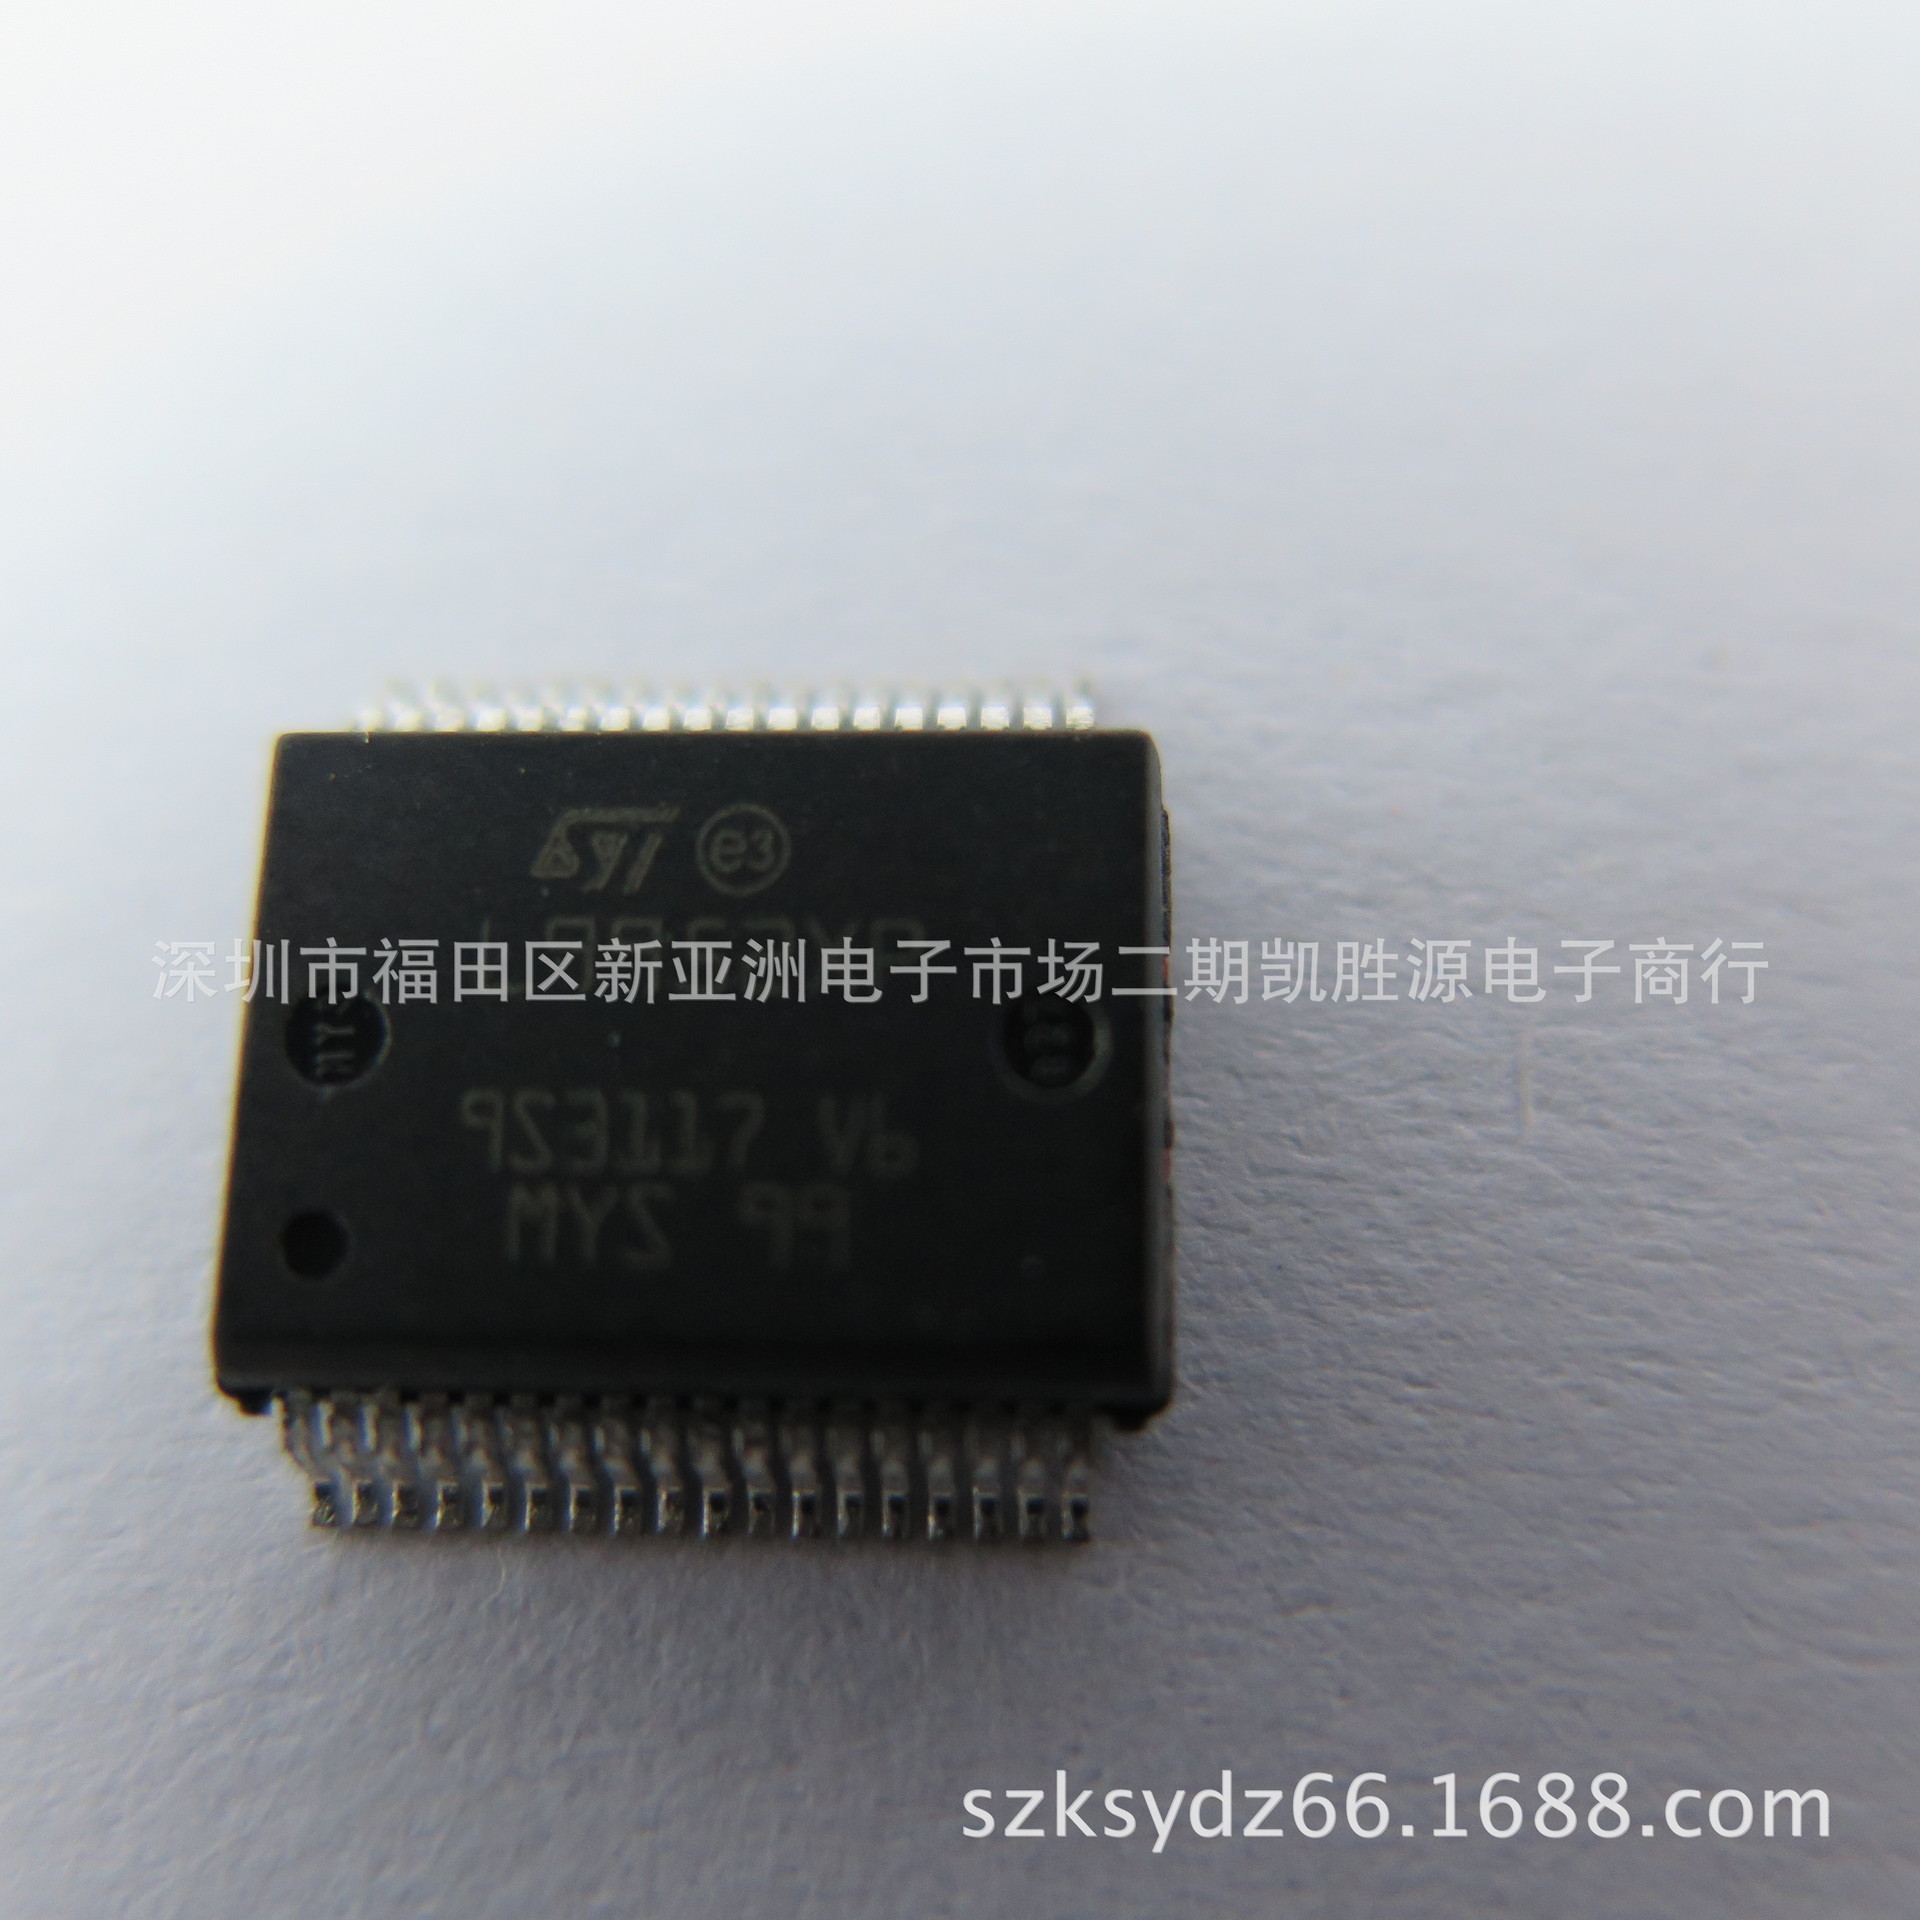 L9952XP进口原装汽车电脑板易损IC芯片集成电路贝博app体育|中国有限公司SSOP36